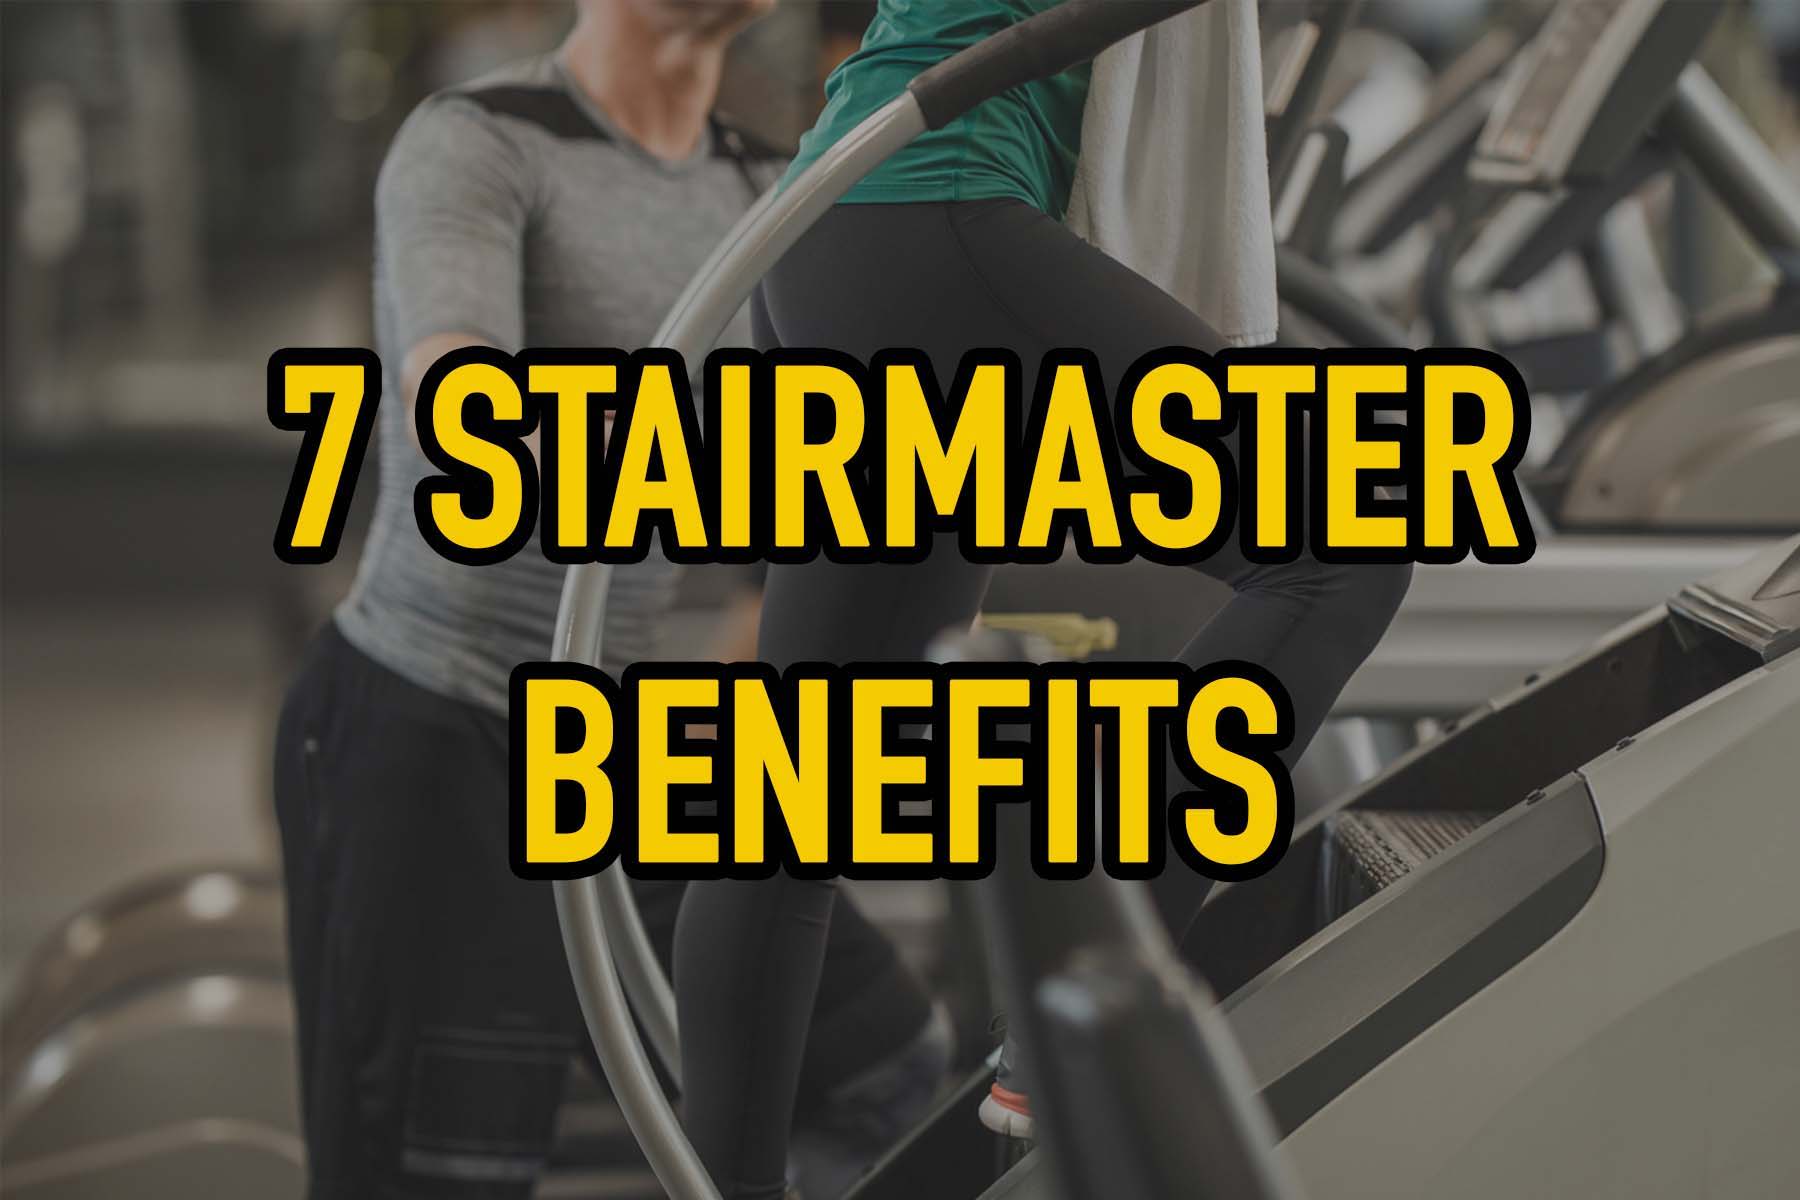 7 stair master benefits